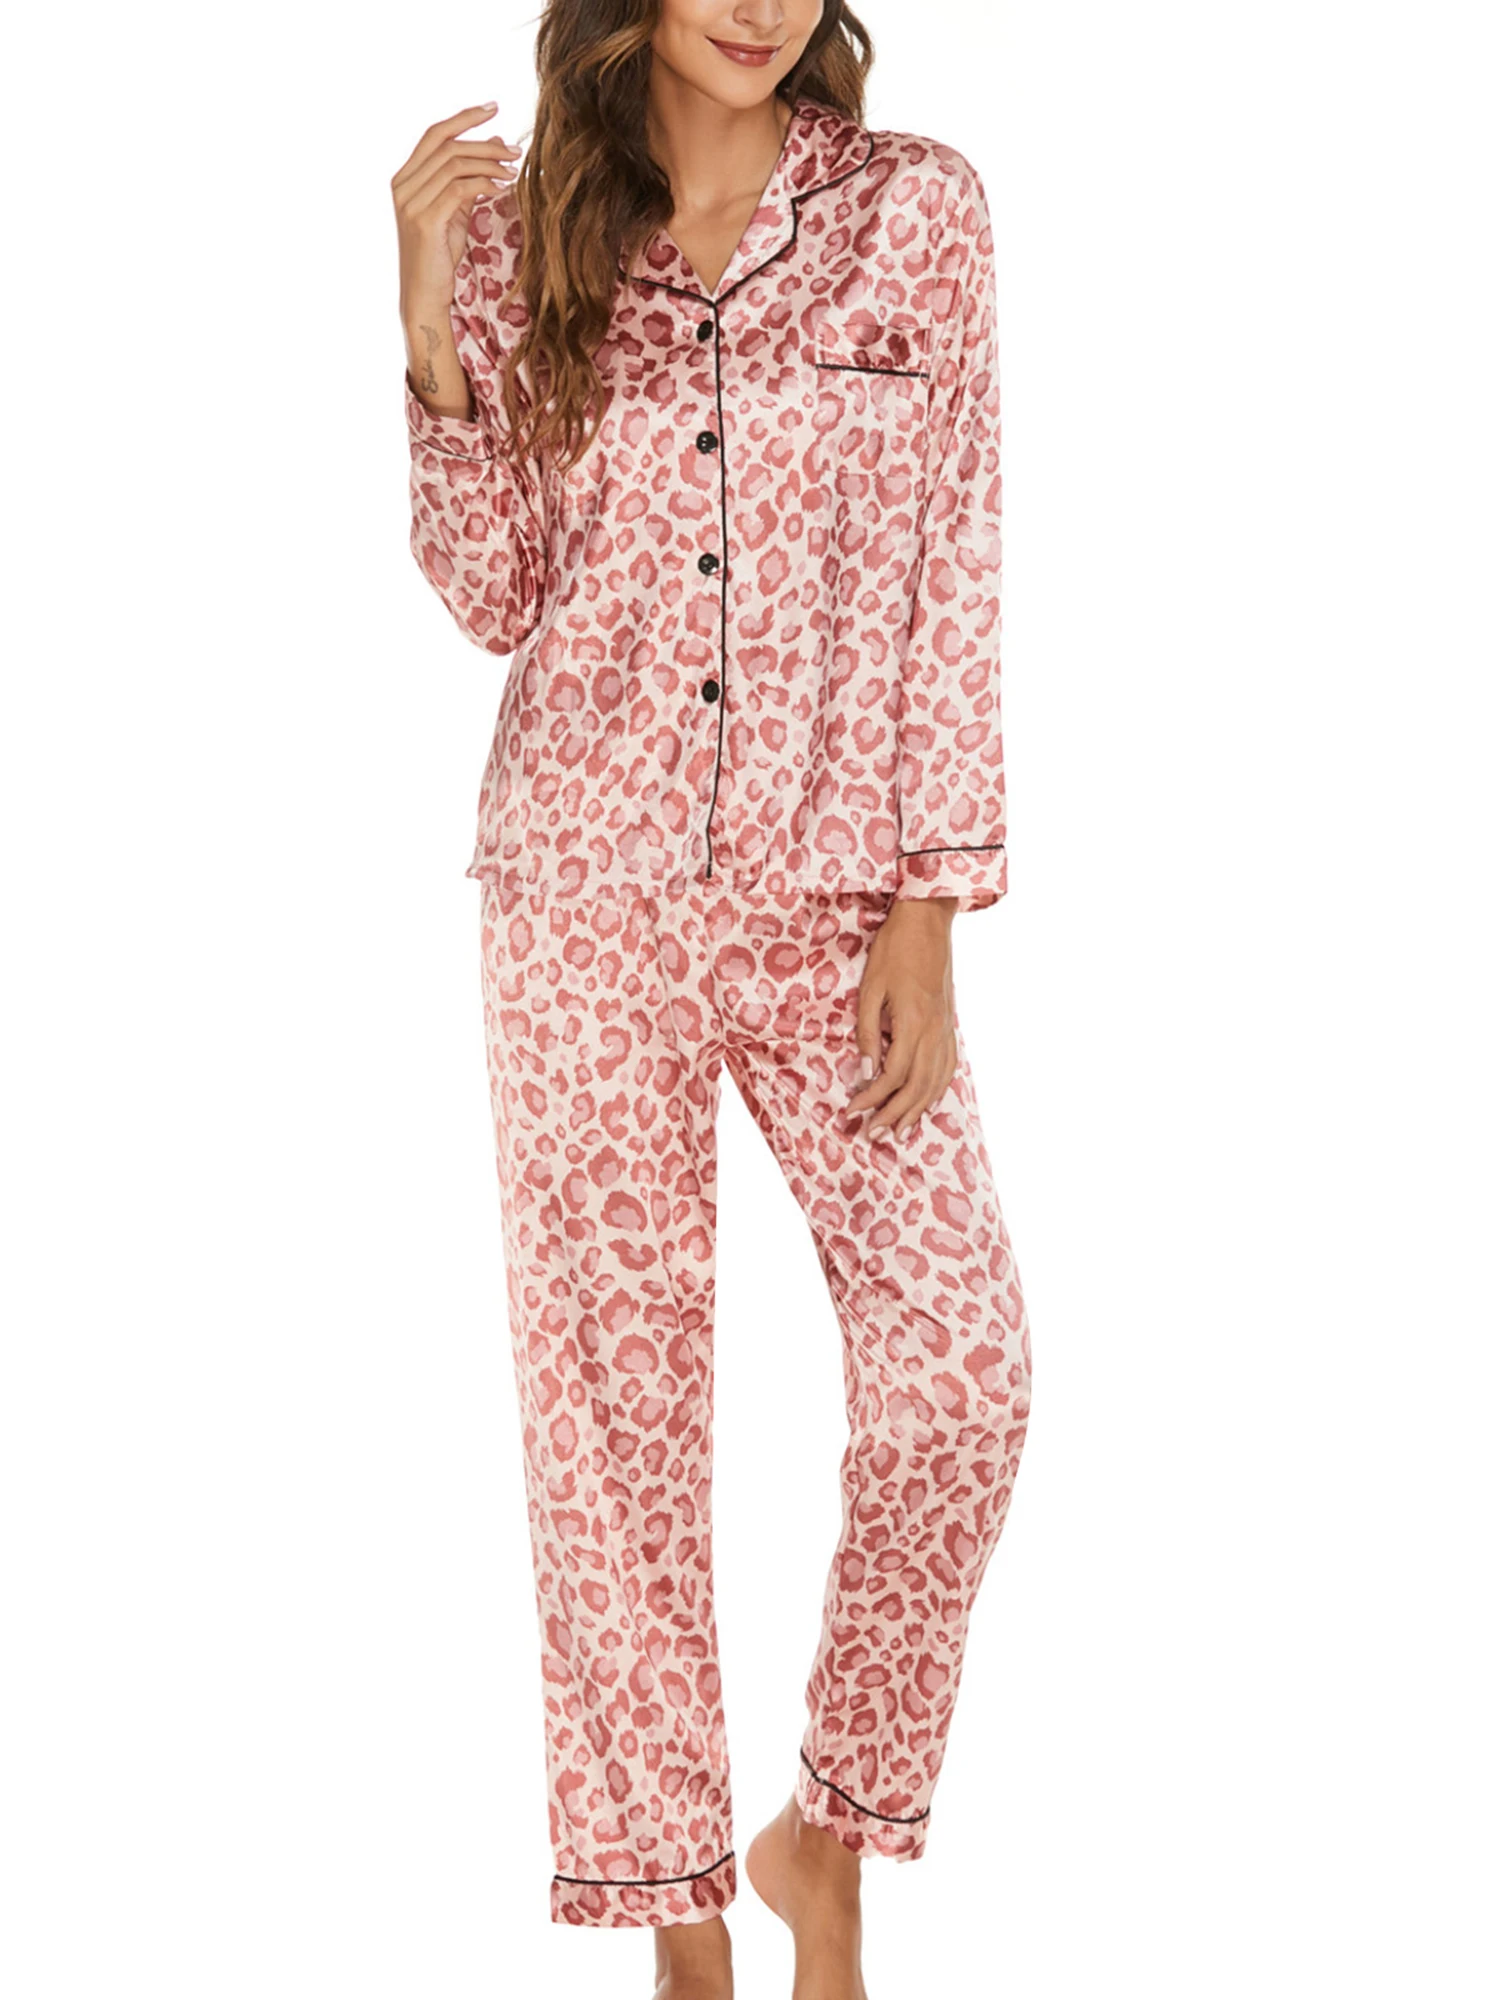 

Women s Cozy Pajama Set Stylish Polka Dots Stars Leopard Print Button-Down Shirt with Comfy Long Pants - 2 Piece Lounge Set